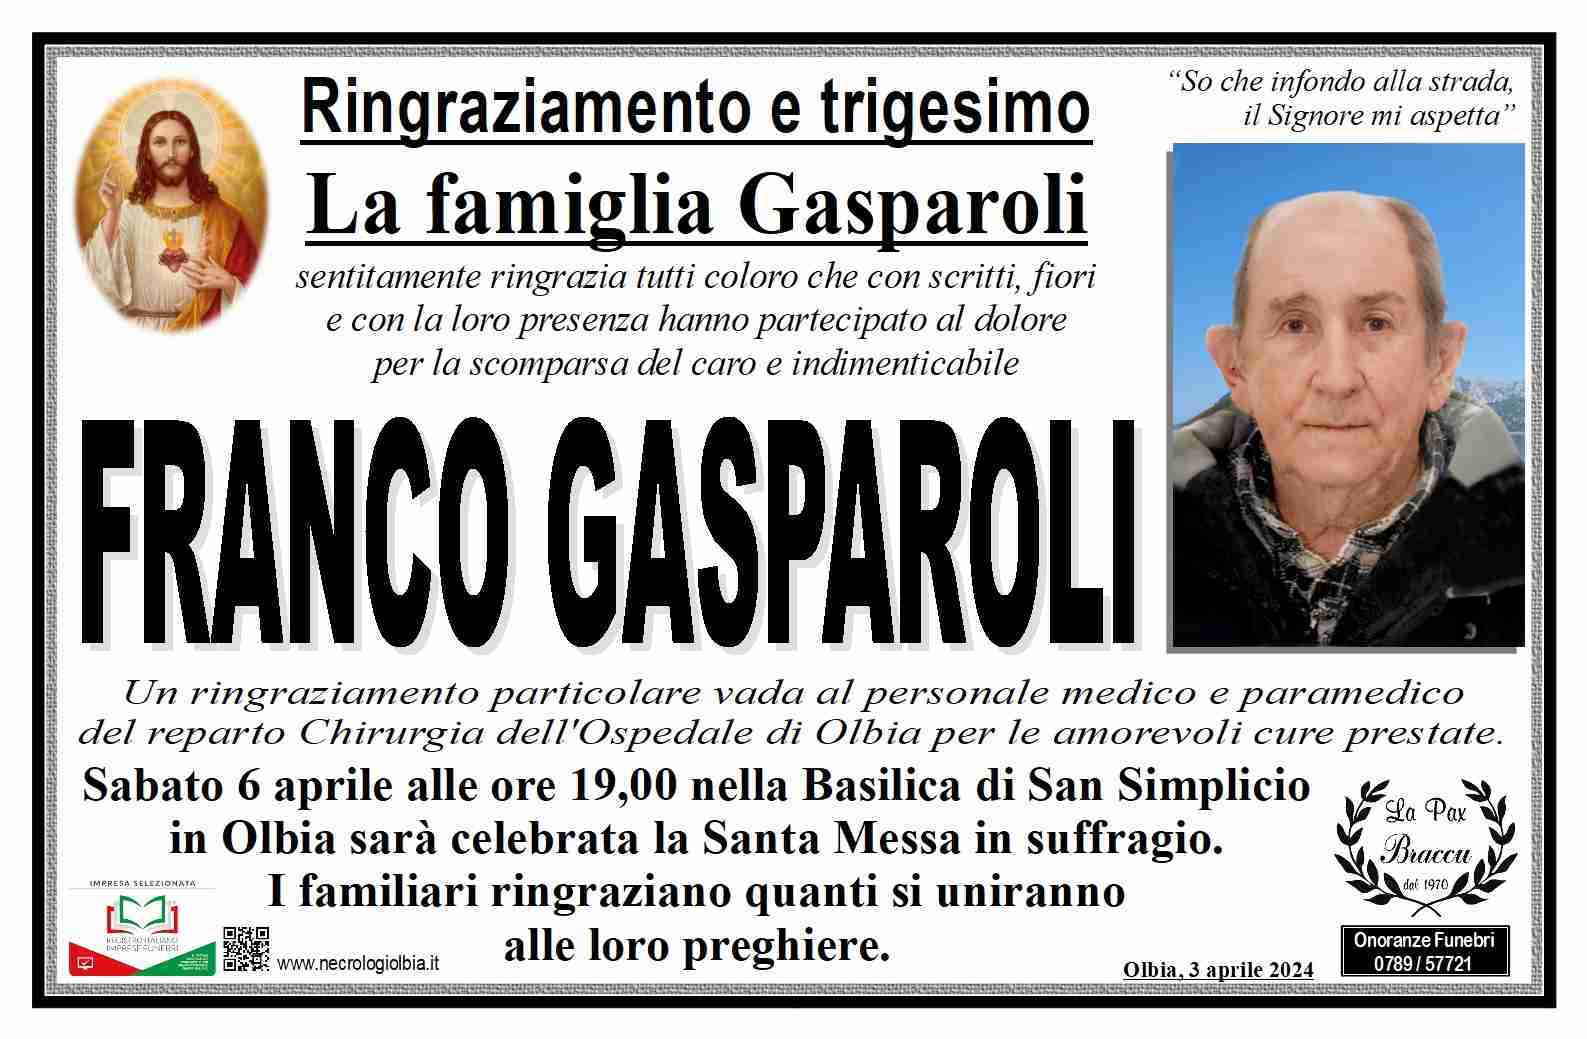 Franco Gasparoli